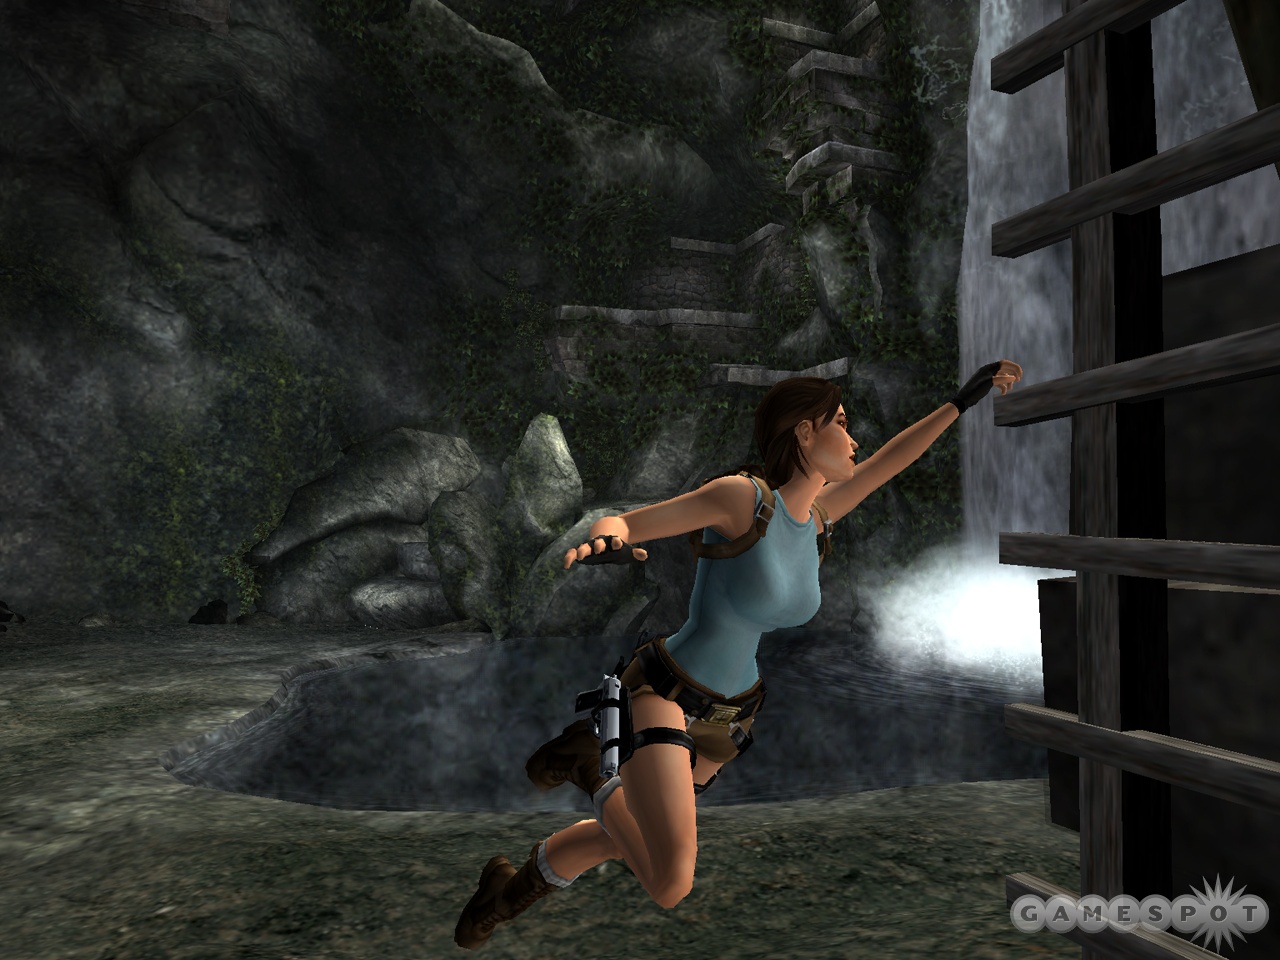 Lara Croft returns in an anniversary celebration of her many adventures.